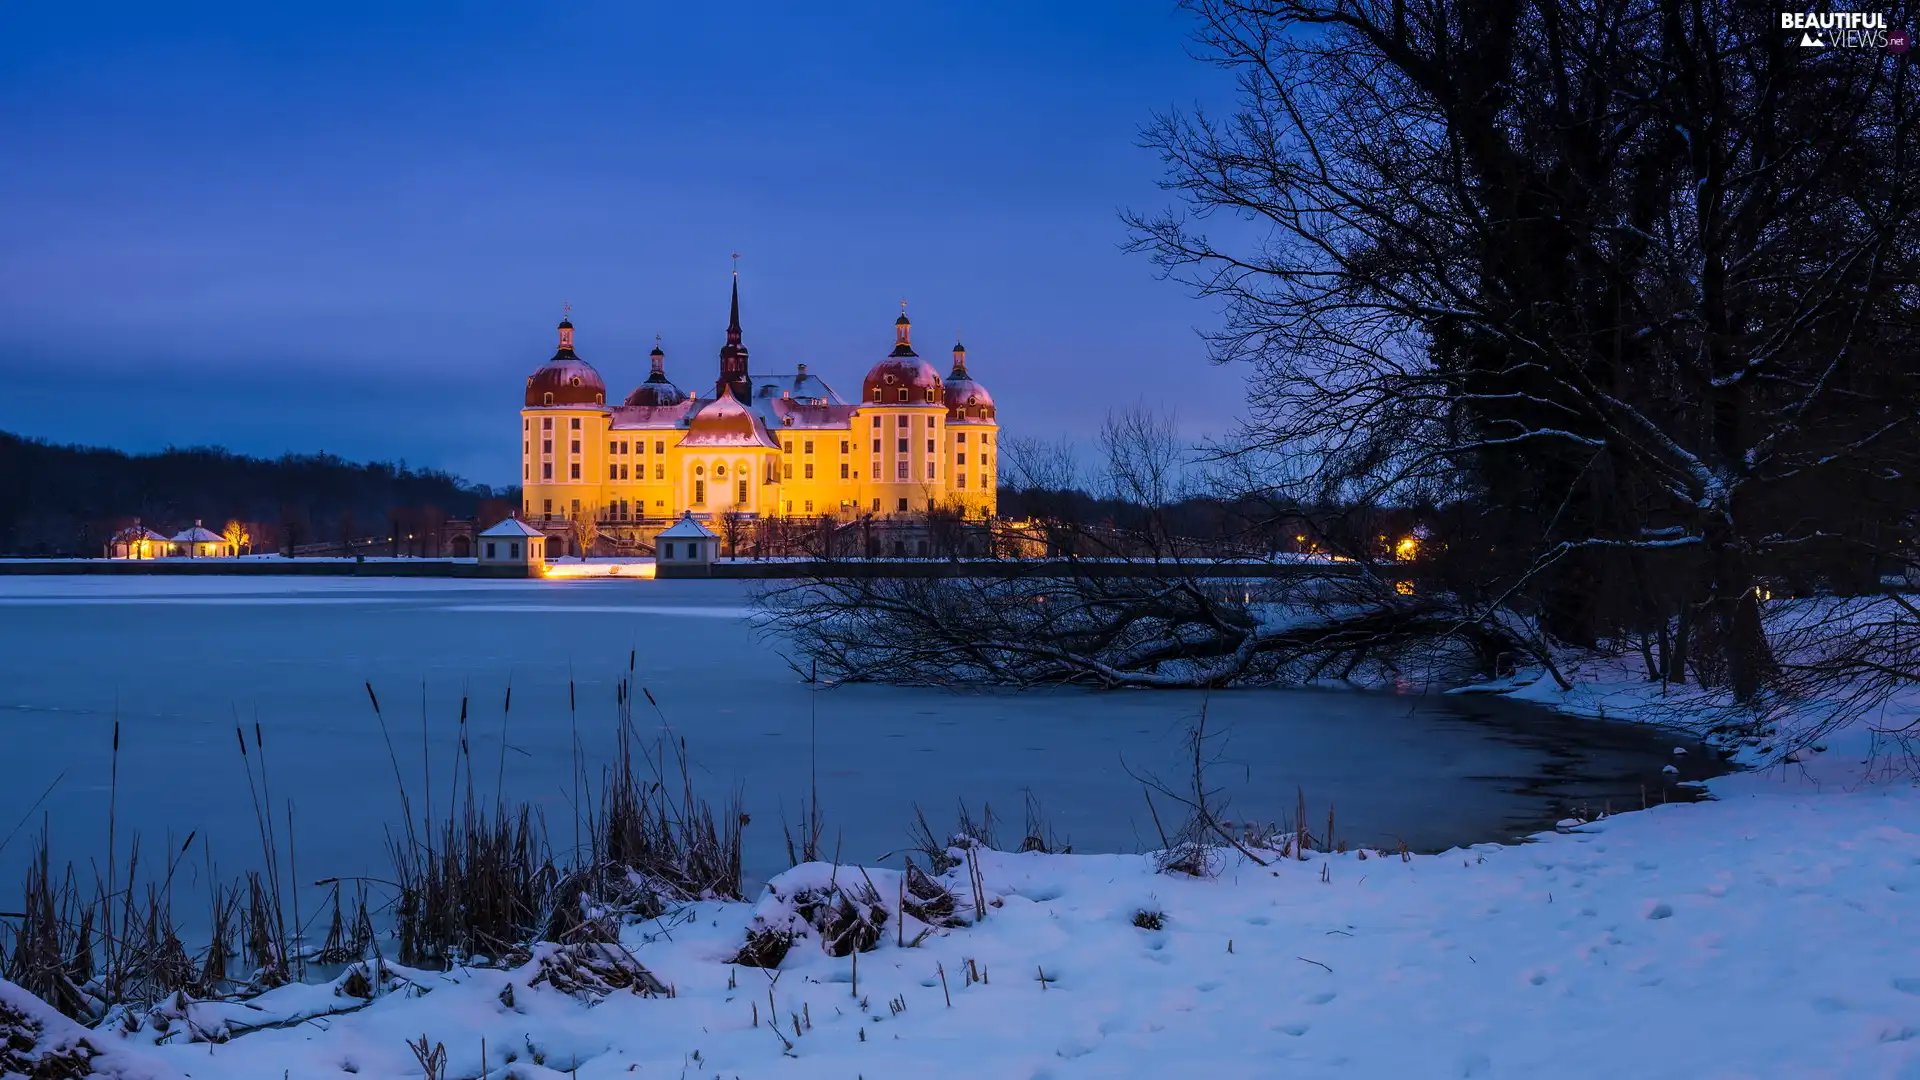 Waldesee Lake, winter, Saxony, Moritzburg Palace, Germany